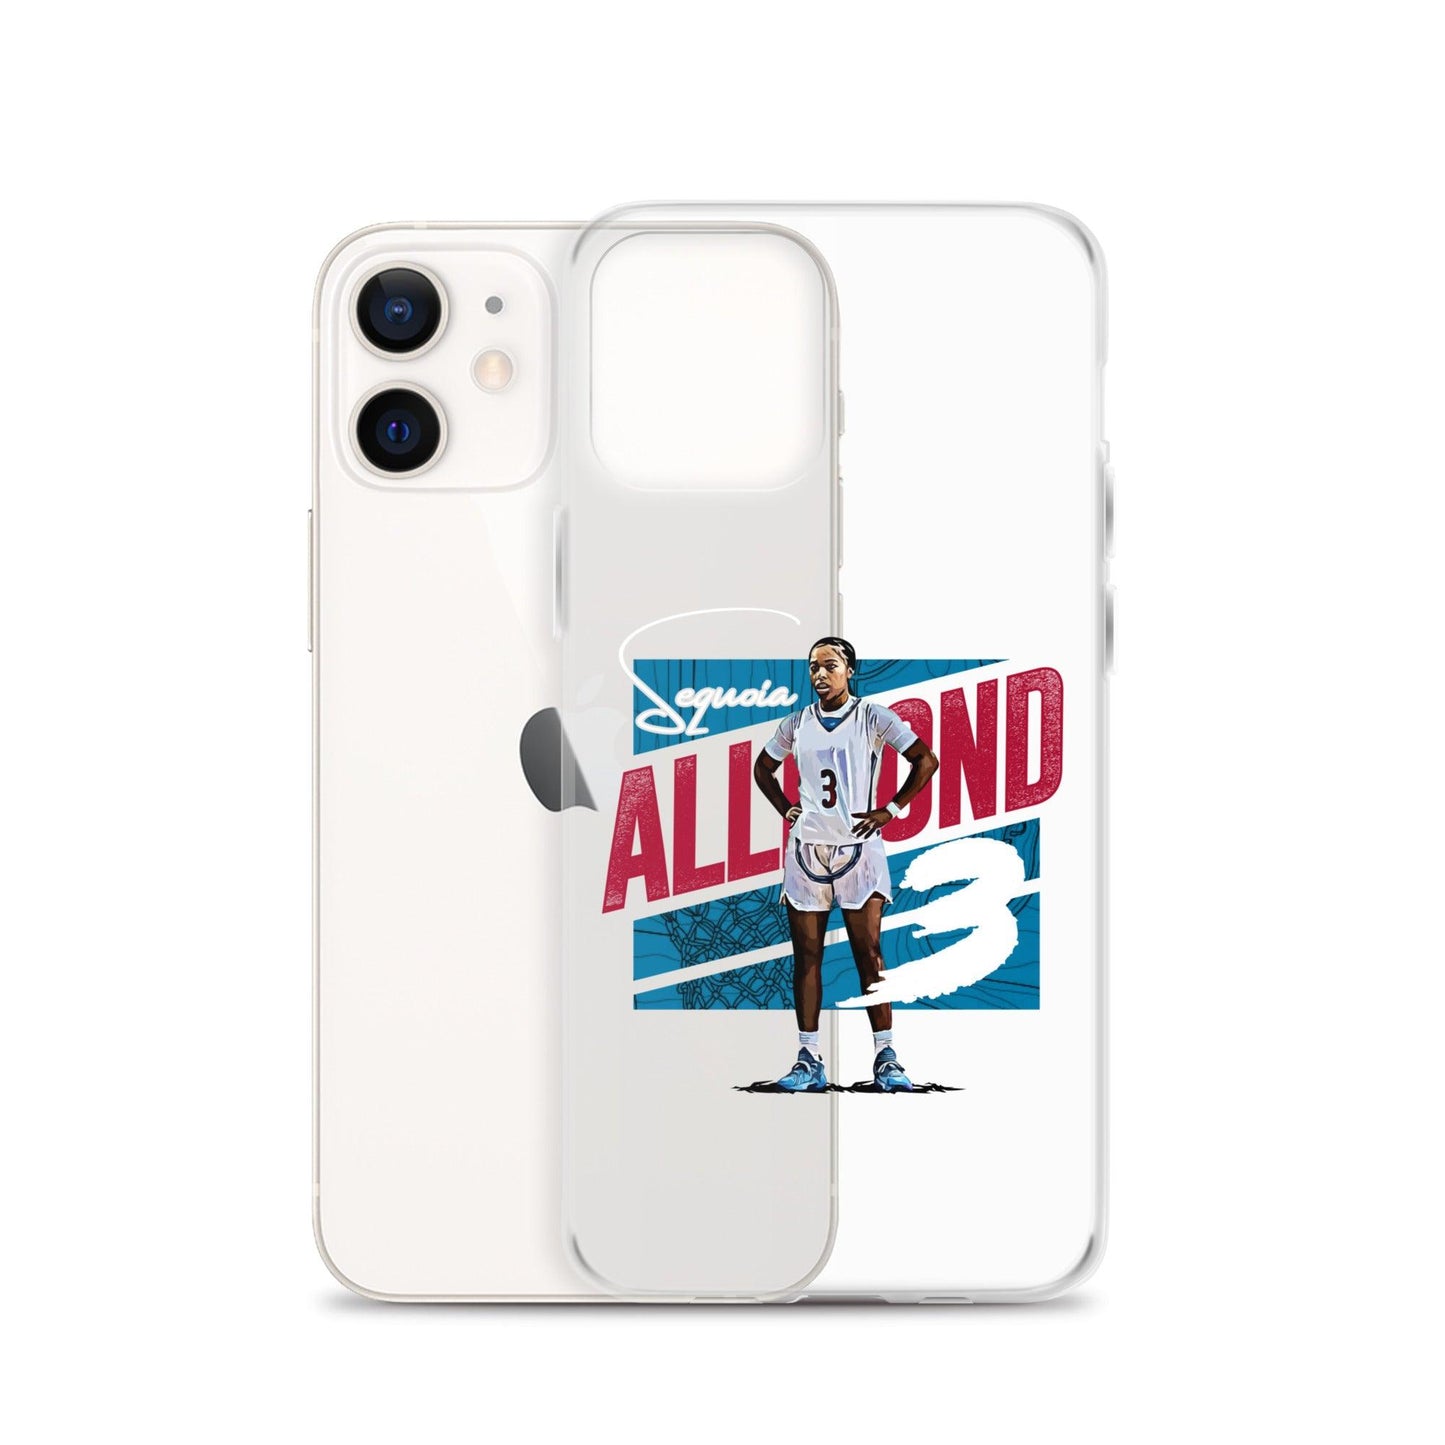 SeQuoia Allmond "Gametime" iPhone Case - Fan Arch